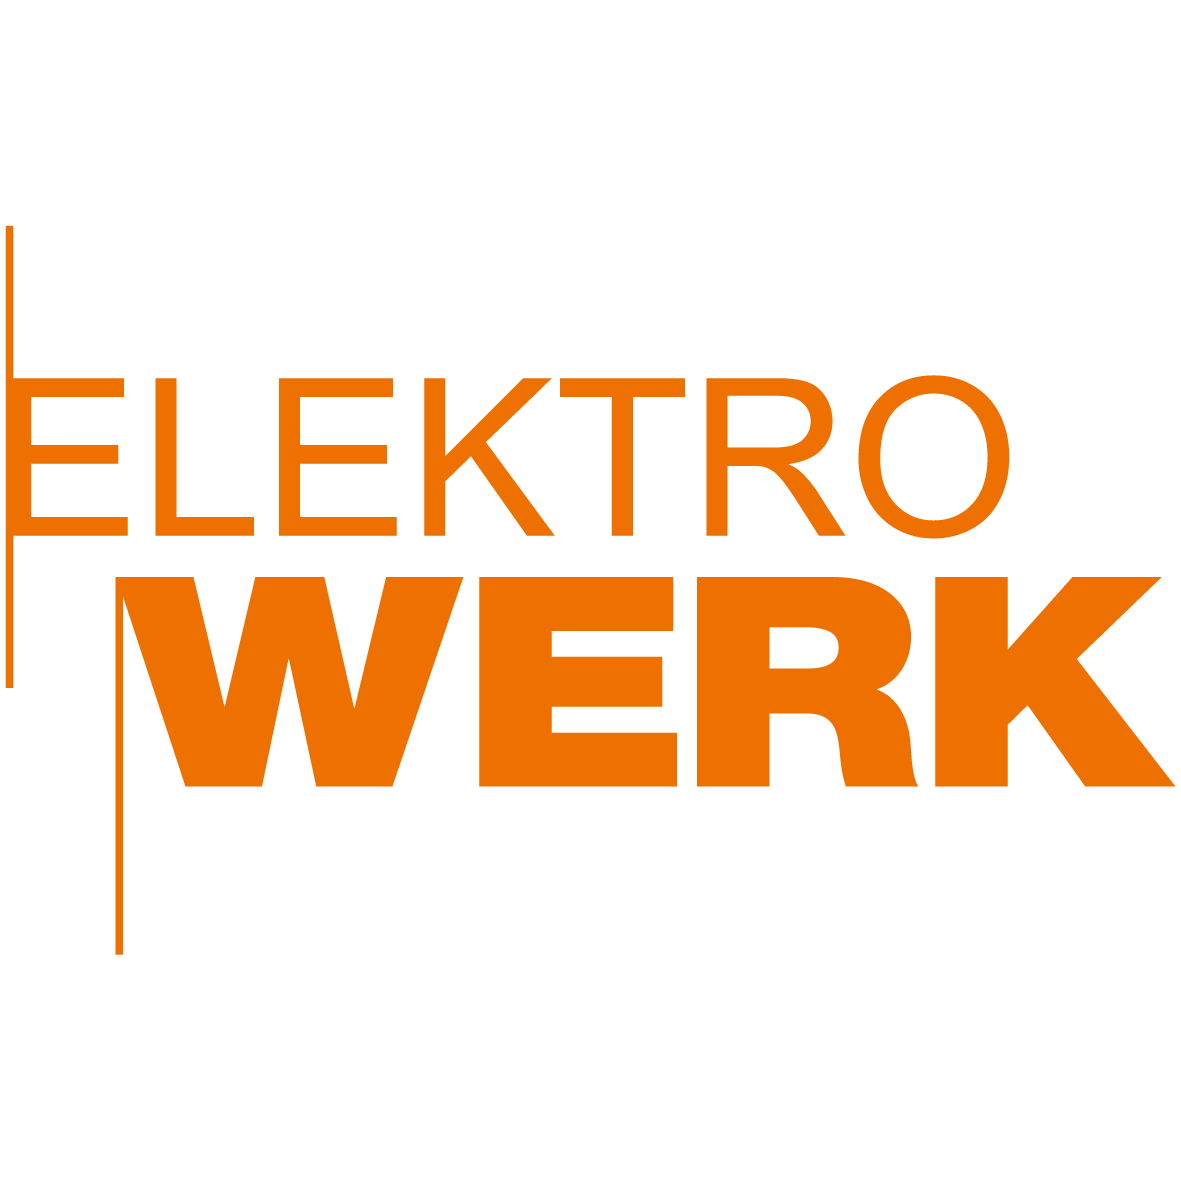 Elektro Werk 13 GmbH - Electrician - Hannover - 0511 7122841 Germany | ShowMeLocal.com